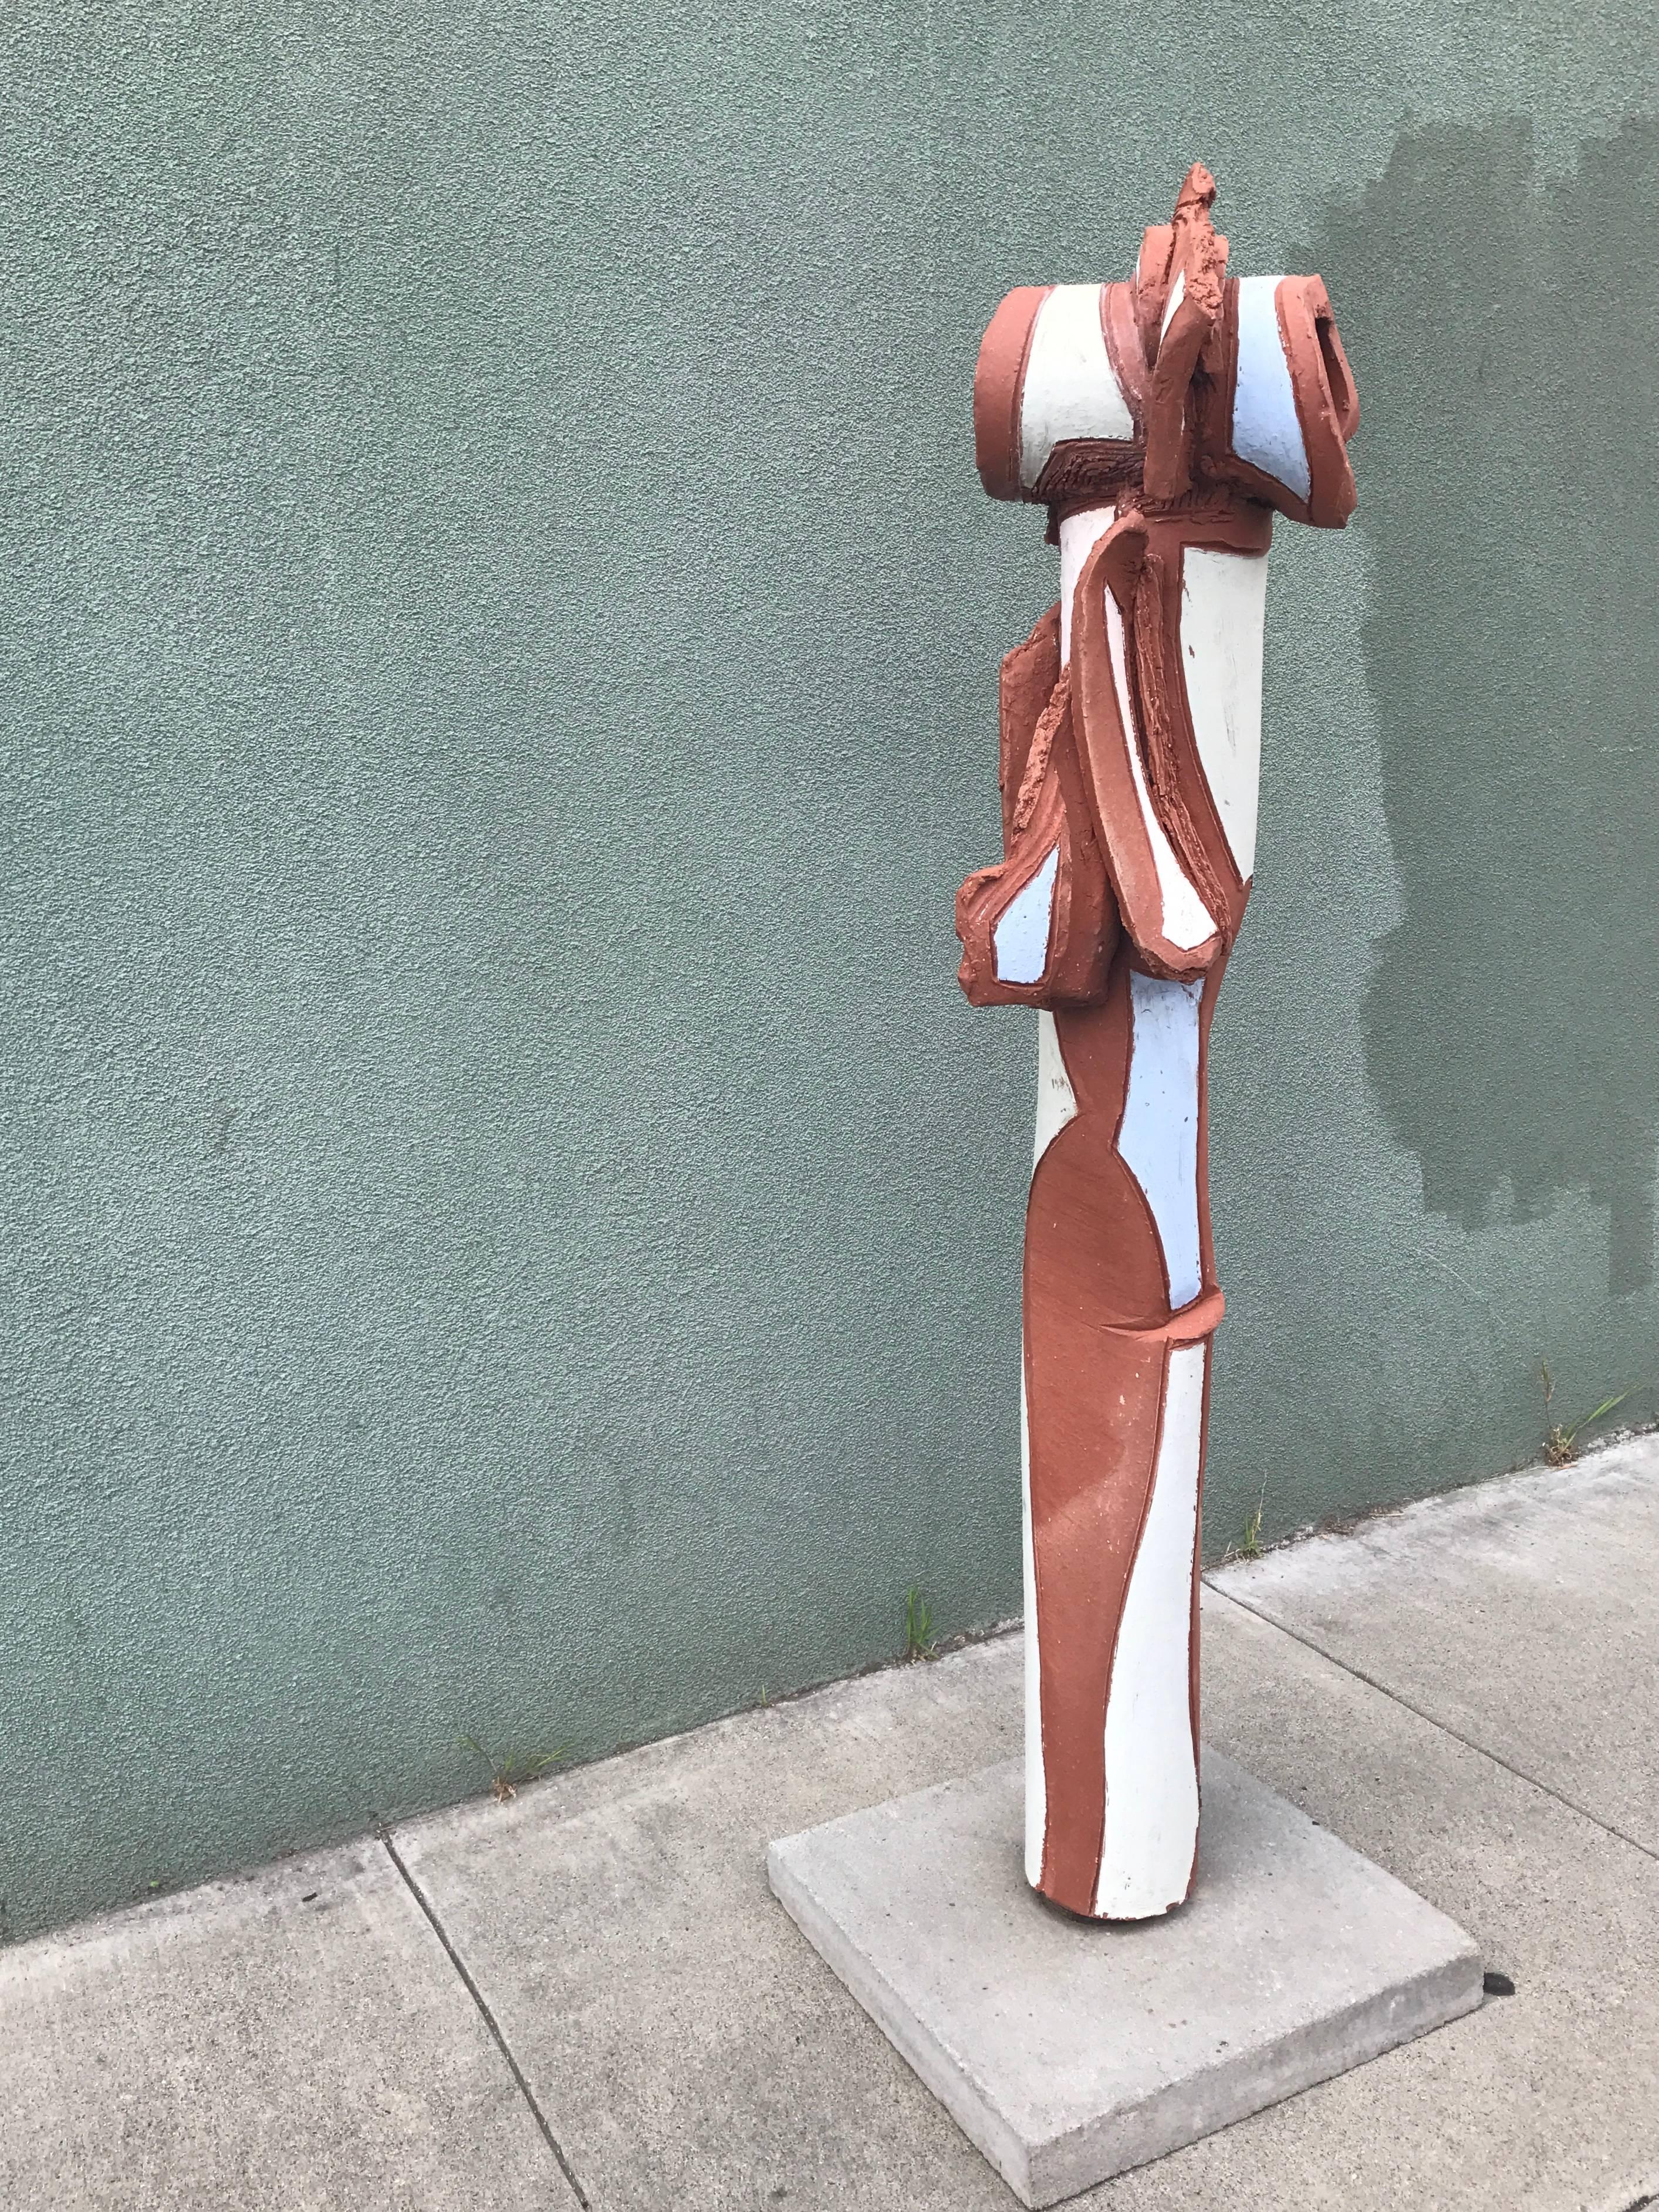 Bay Area Large Glazed Ceramic Abstract or Brutalist TOTEM Sculpture #2 For Sale 1